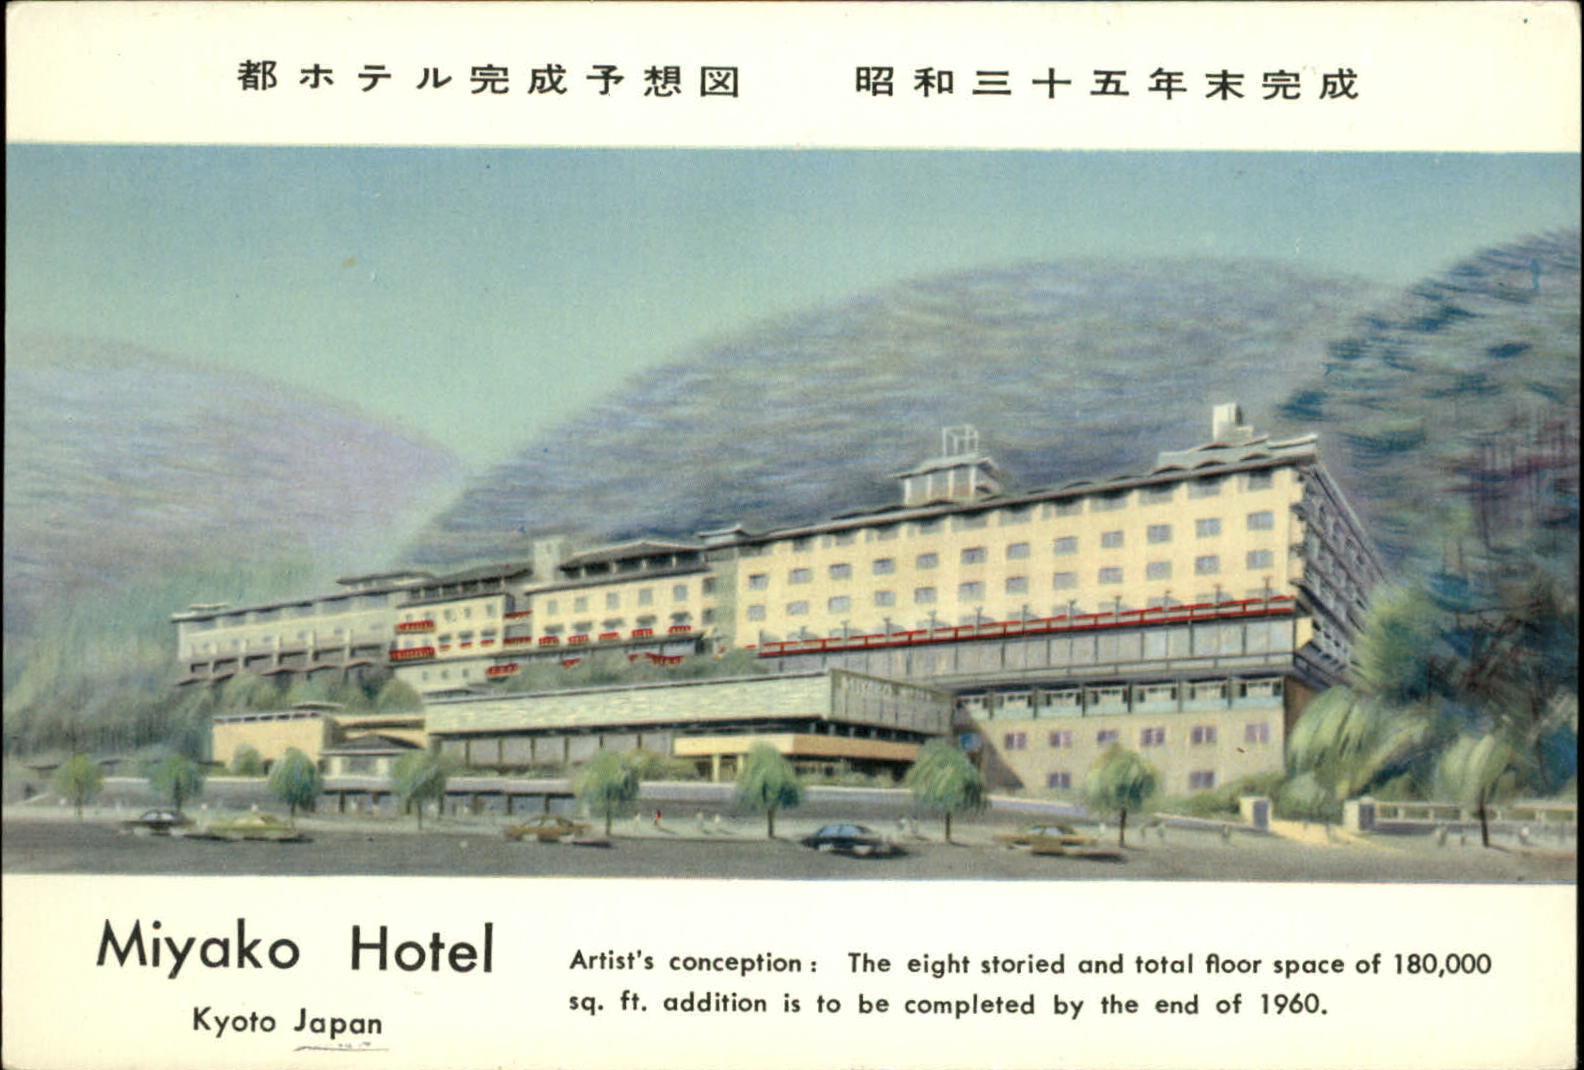 Kyoto Japan Miyako Hotel artist conception unused postcard